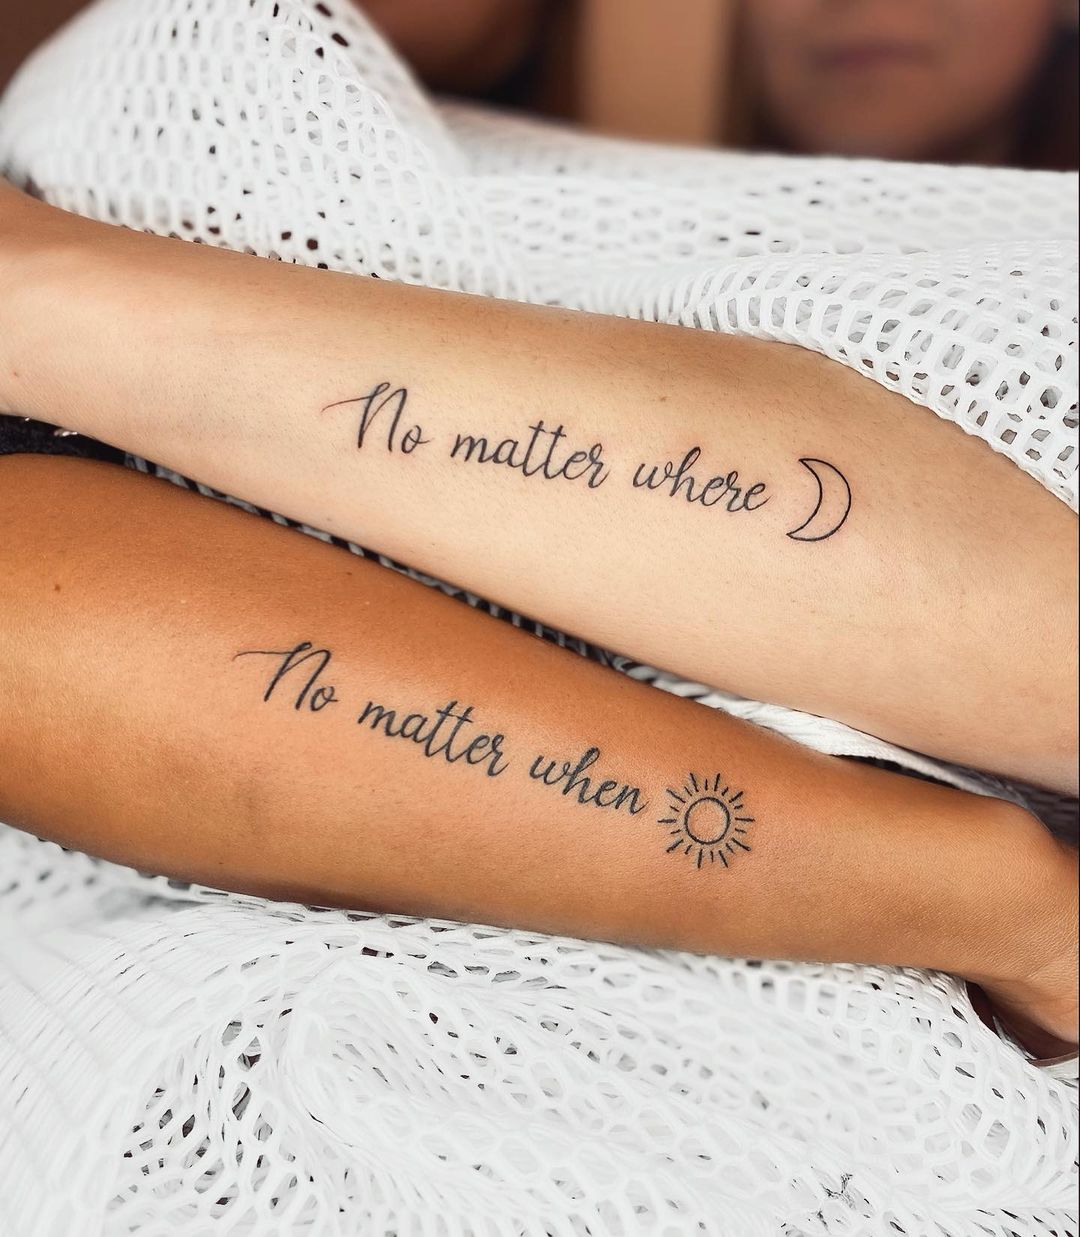 20 Best Friend Tattoo Ideas To Strengthen Their Bond - Tikli